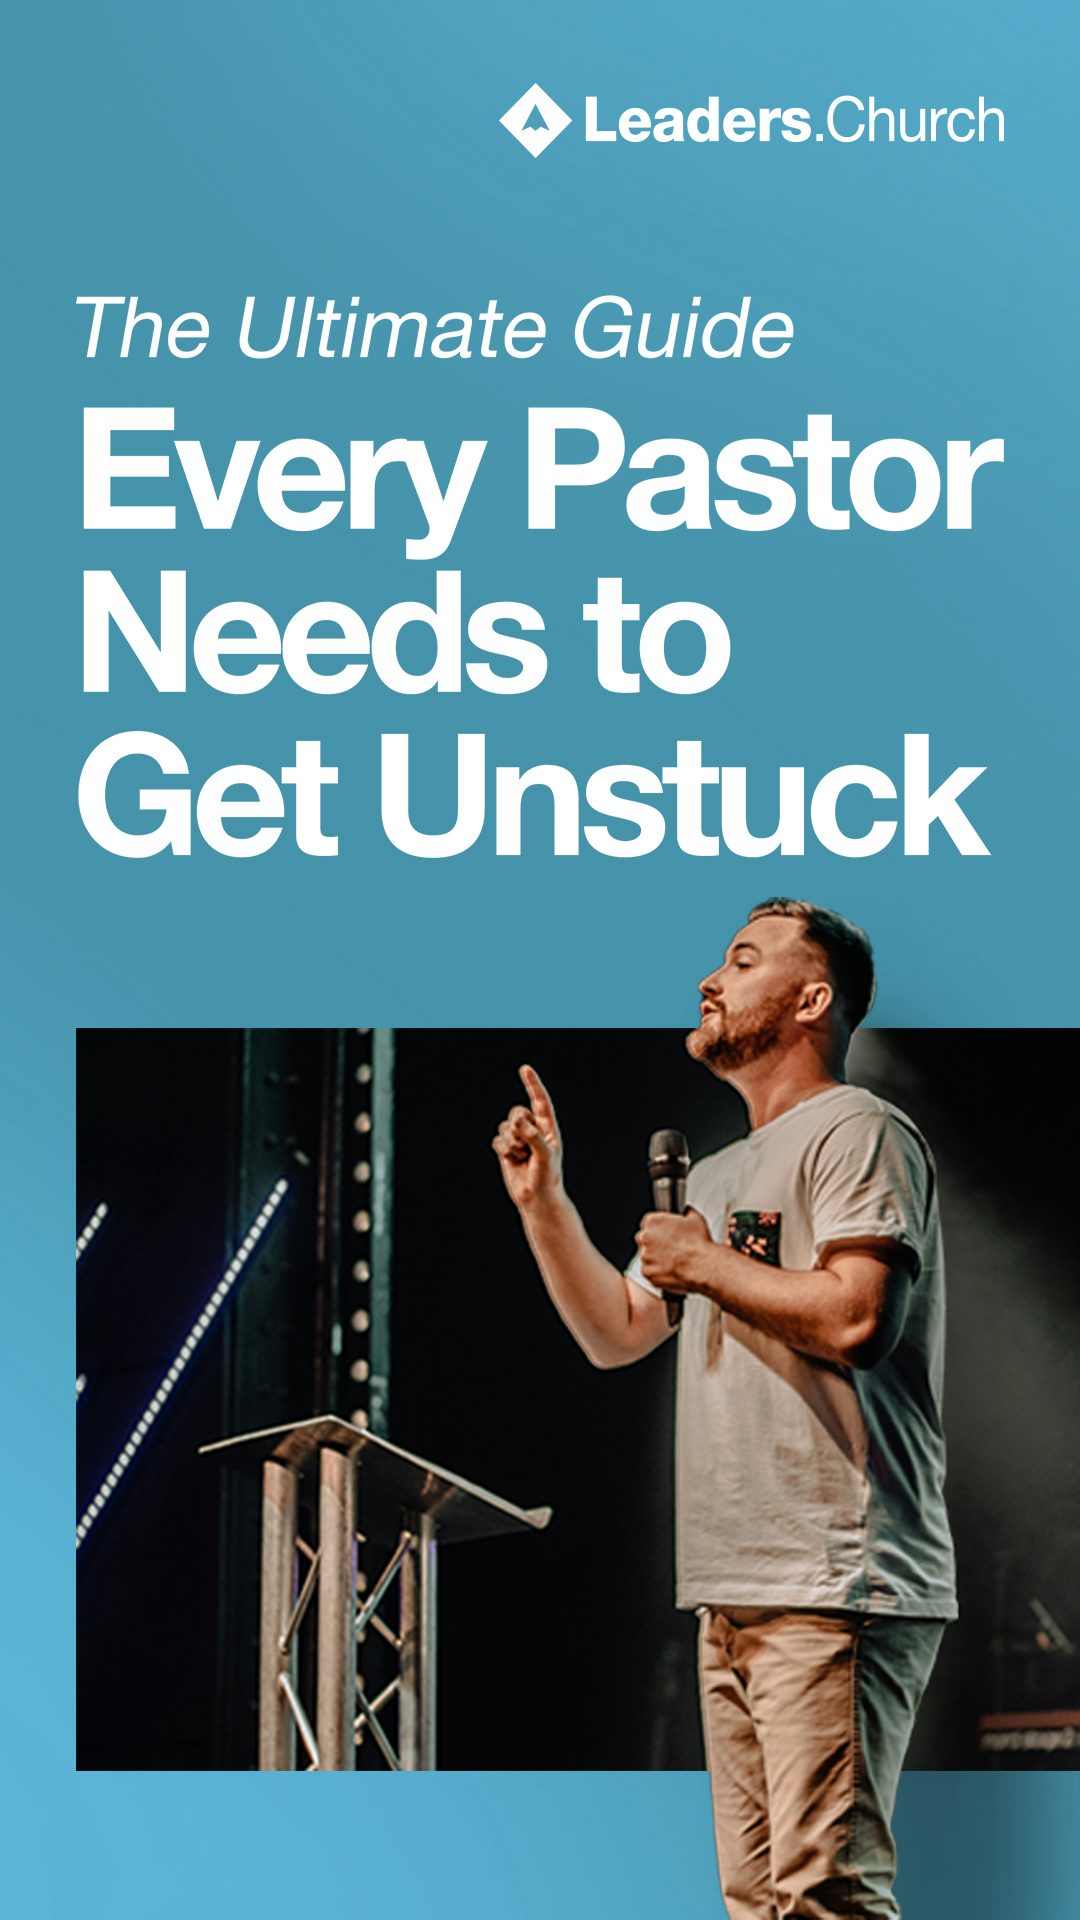 The Ultimate Guide to Help Pastors Get Untsuck in Ministry